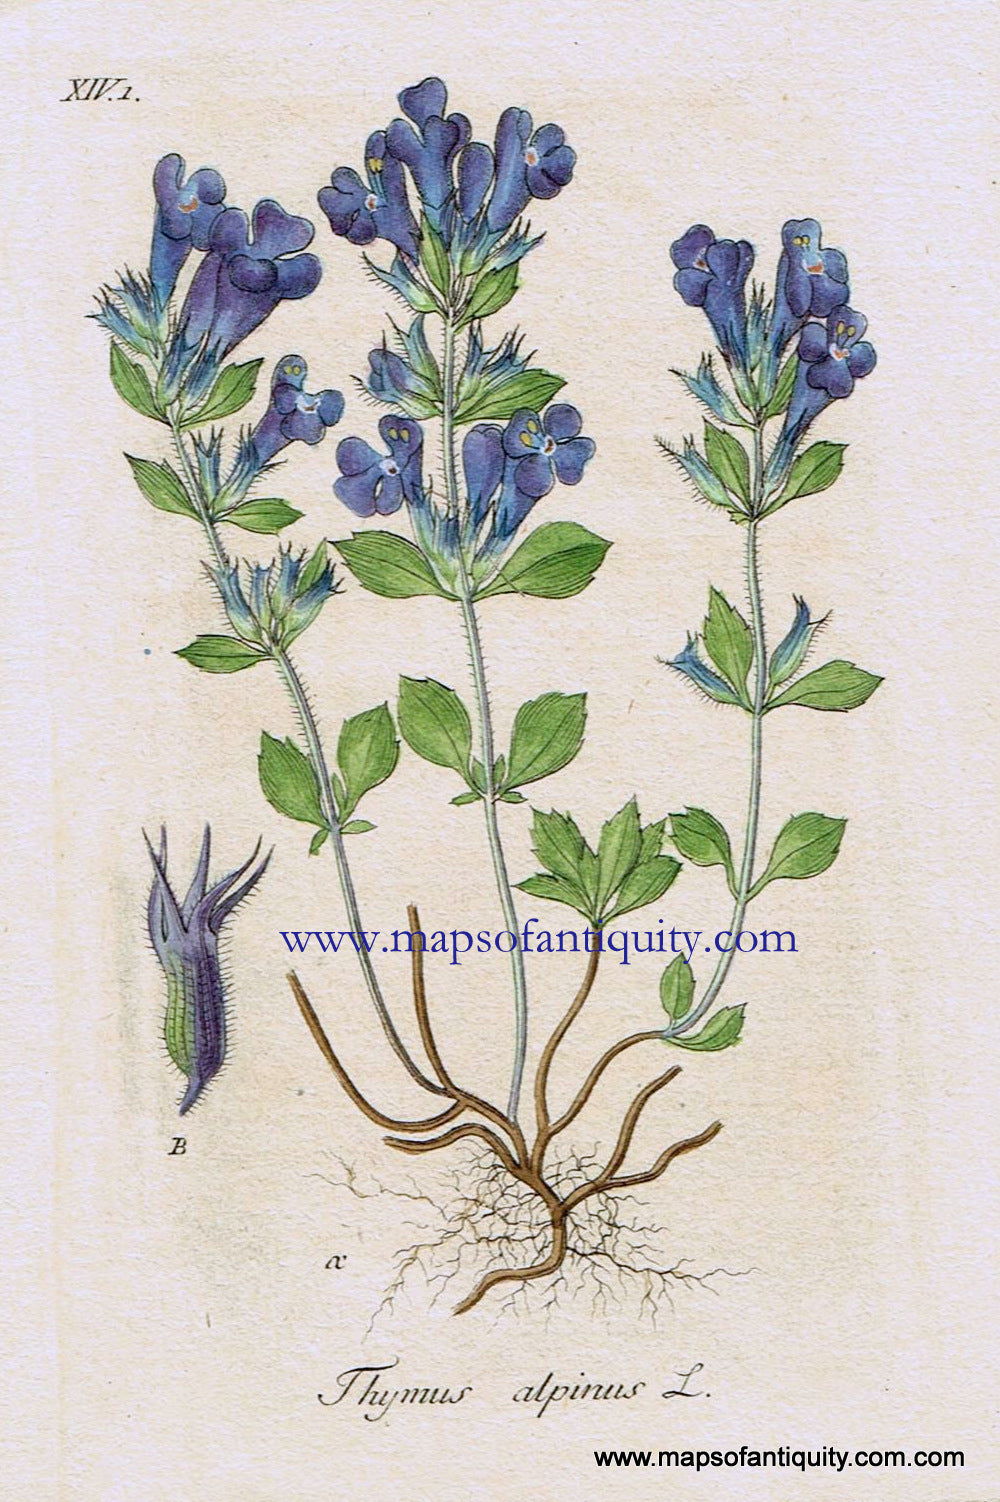 Antique-Hand-Colored-Botanical-Print-Thymus-alpinus-L.-or-mountain-thyme-Botanical-Illustration-**********-Antique-Prints--Natural-History-Botanical-1828-Jacob-Sturm-Maps-Of-Antiquity